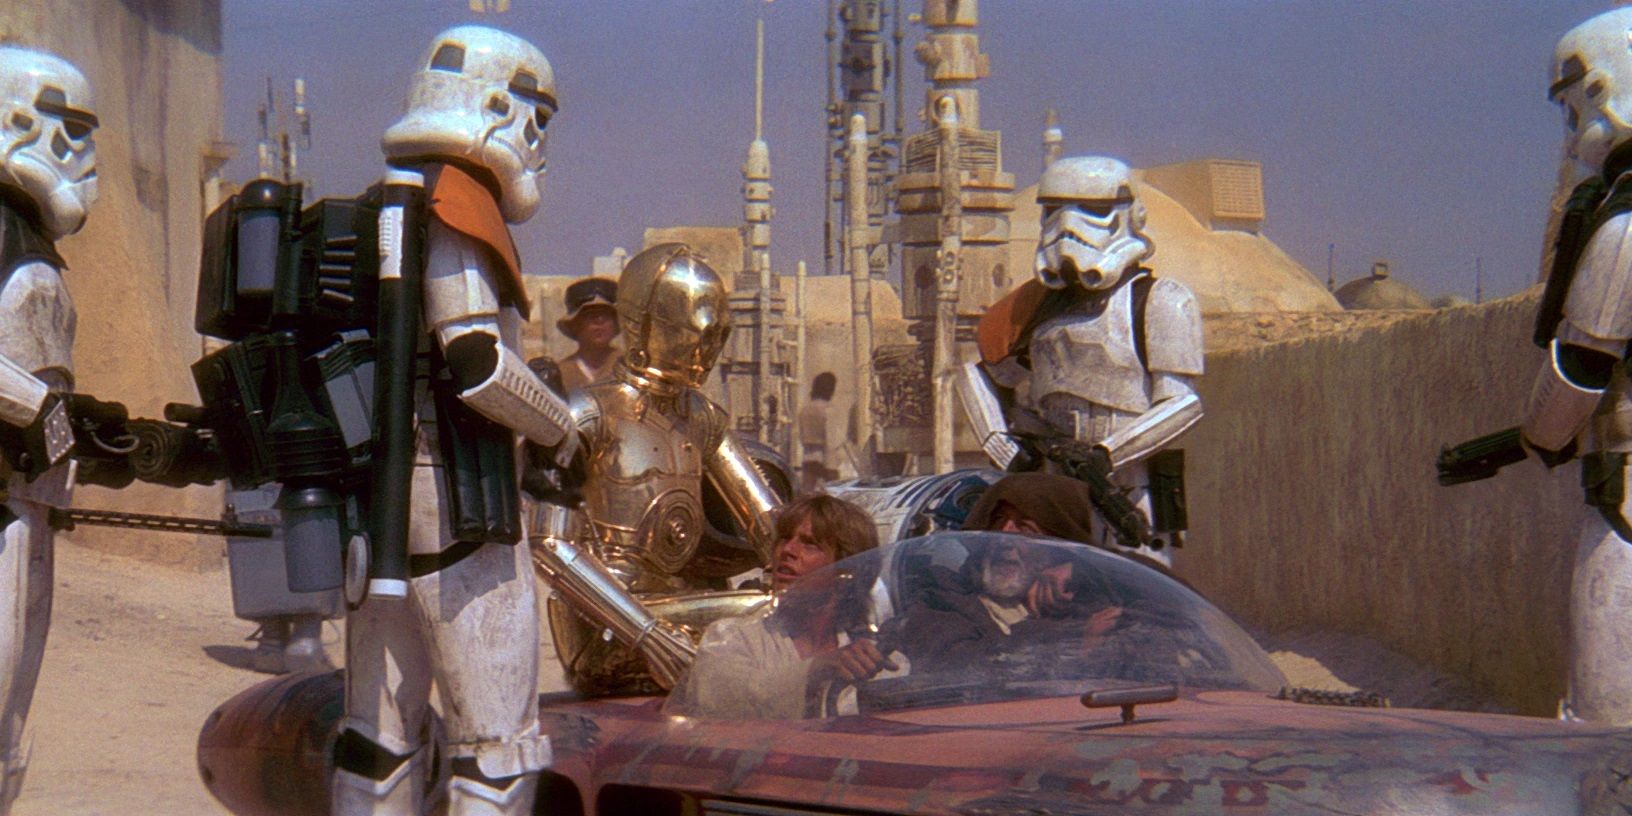 Some Stormtroopers inspect Luke's landspeeder at Mos Eisley Spaceport